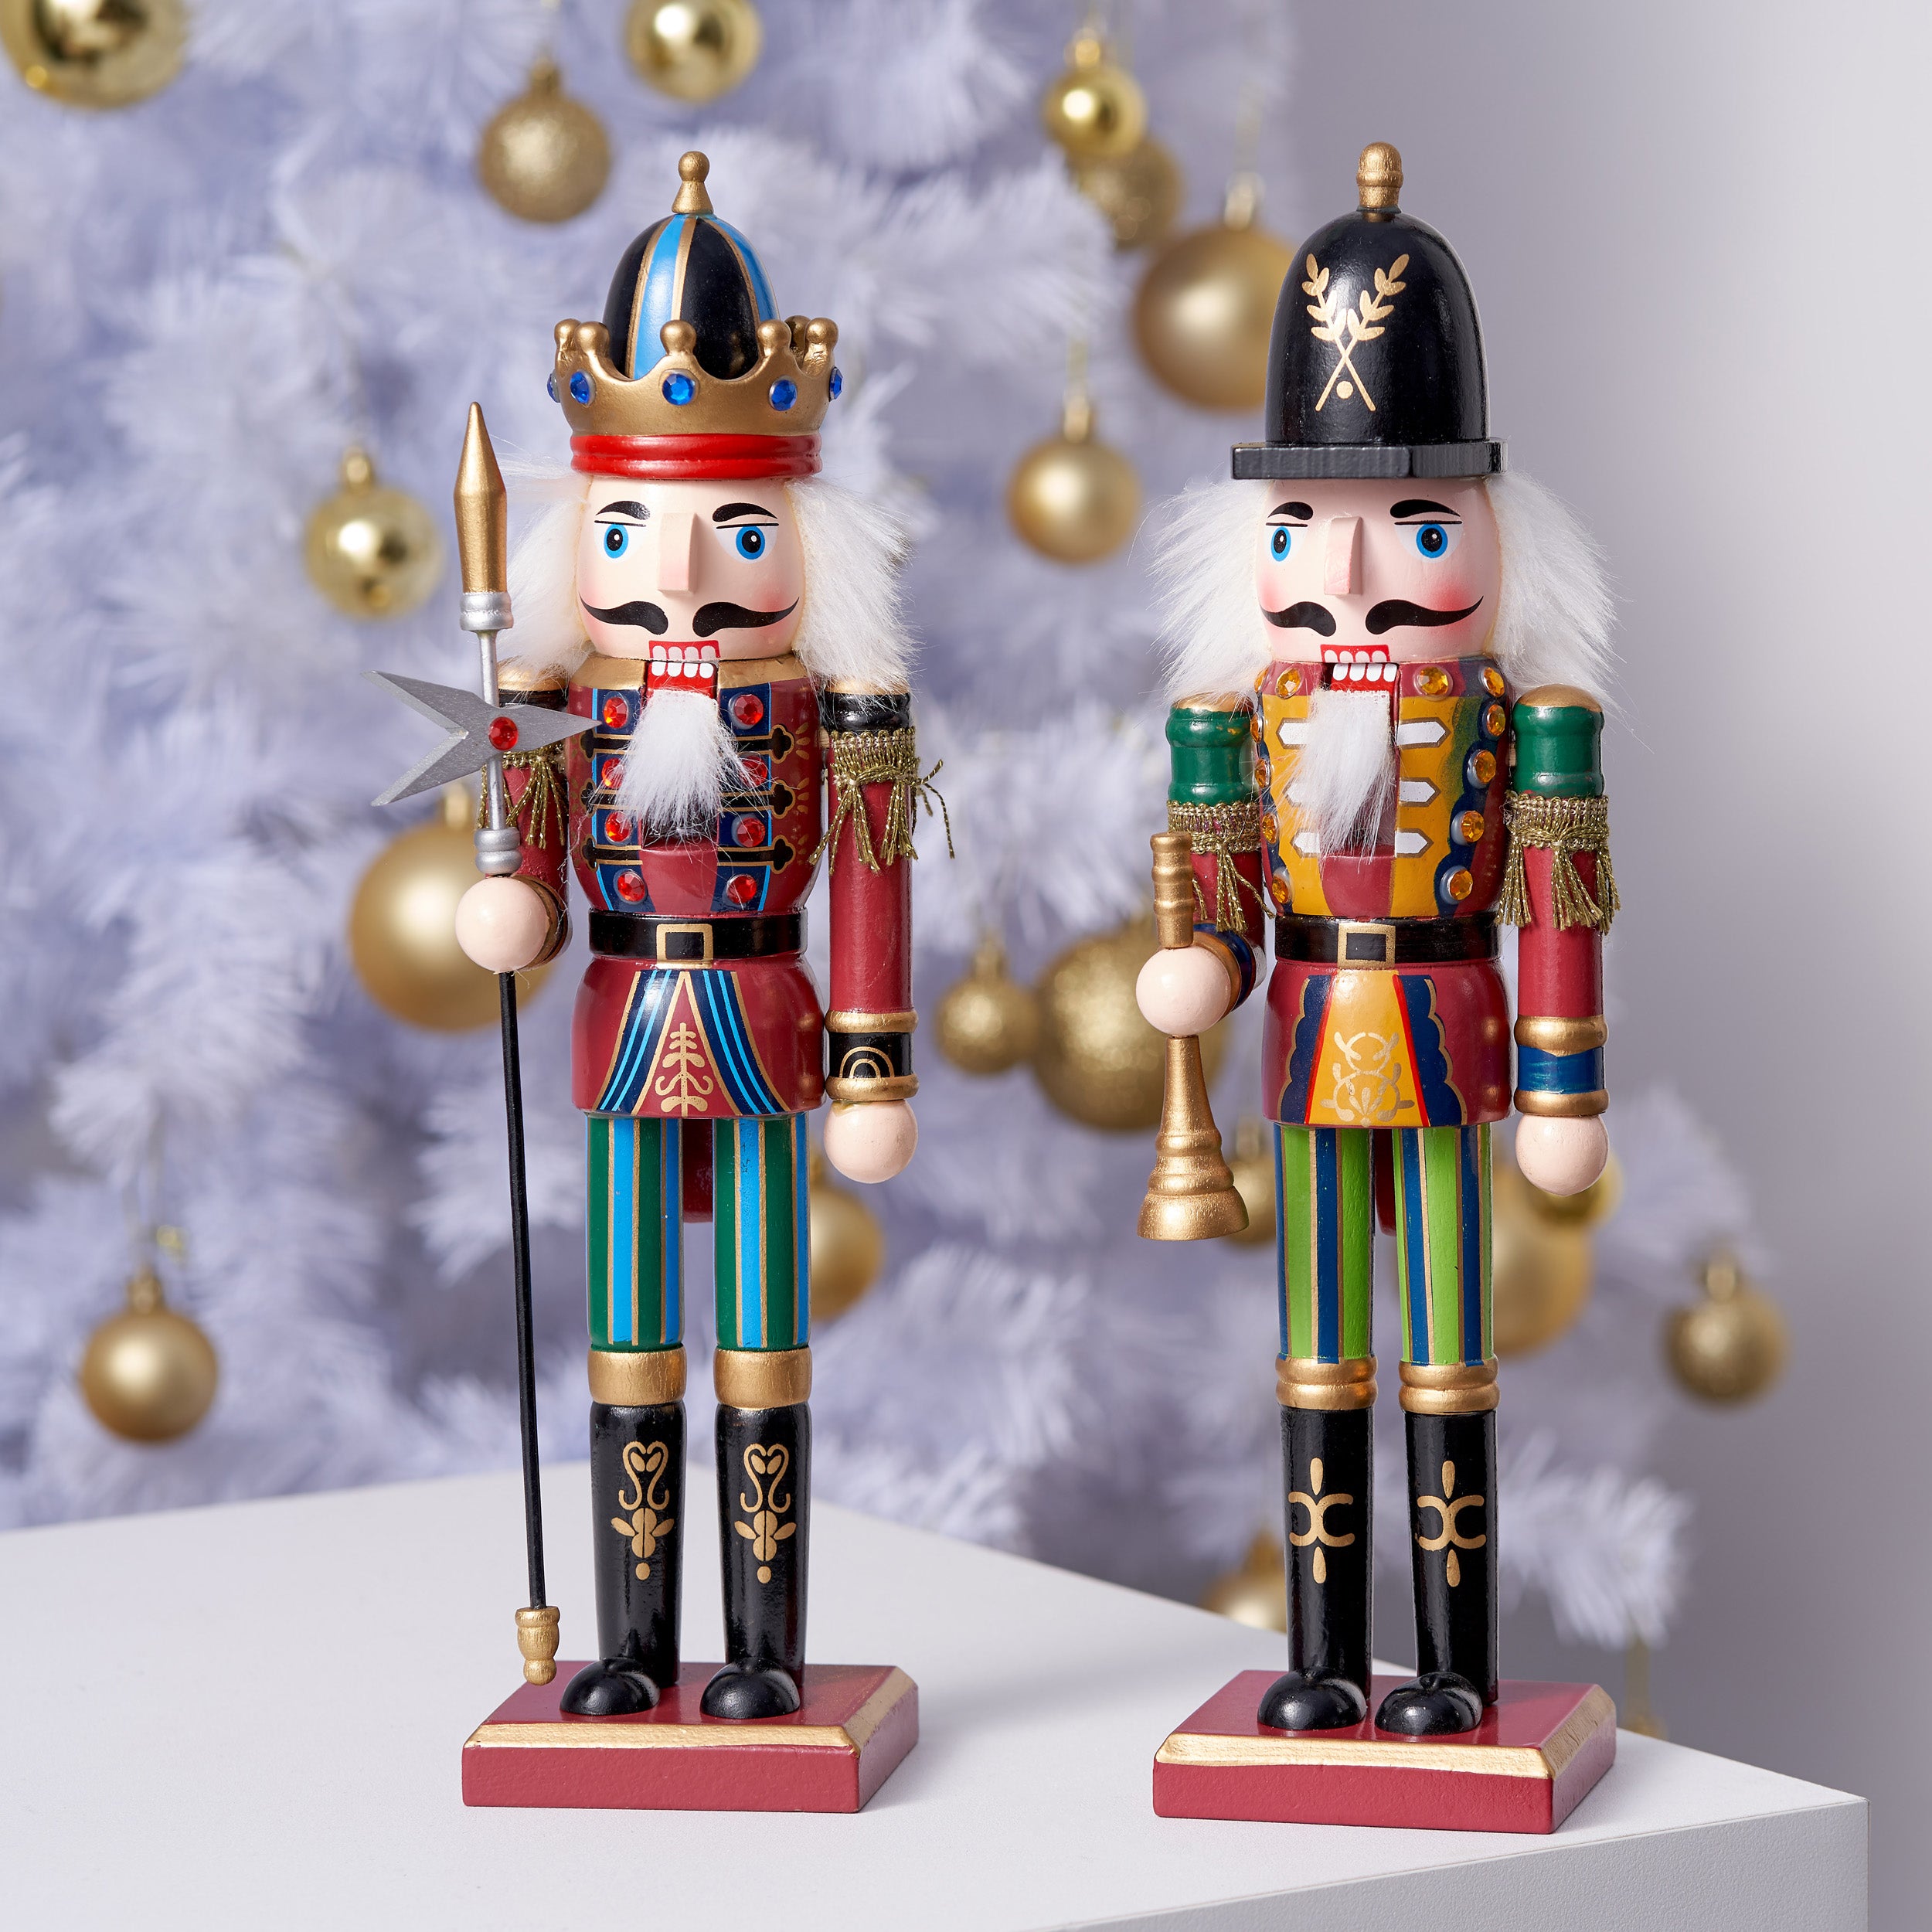 2 Nutcracker Soldier Ornaments